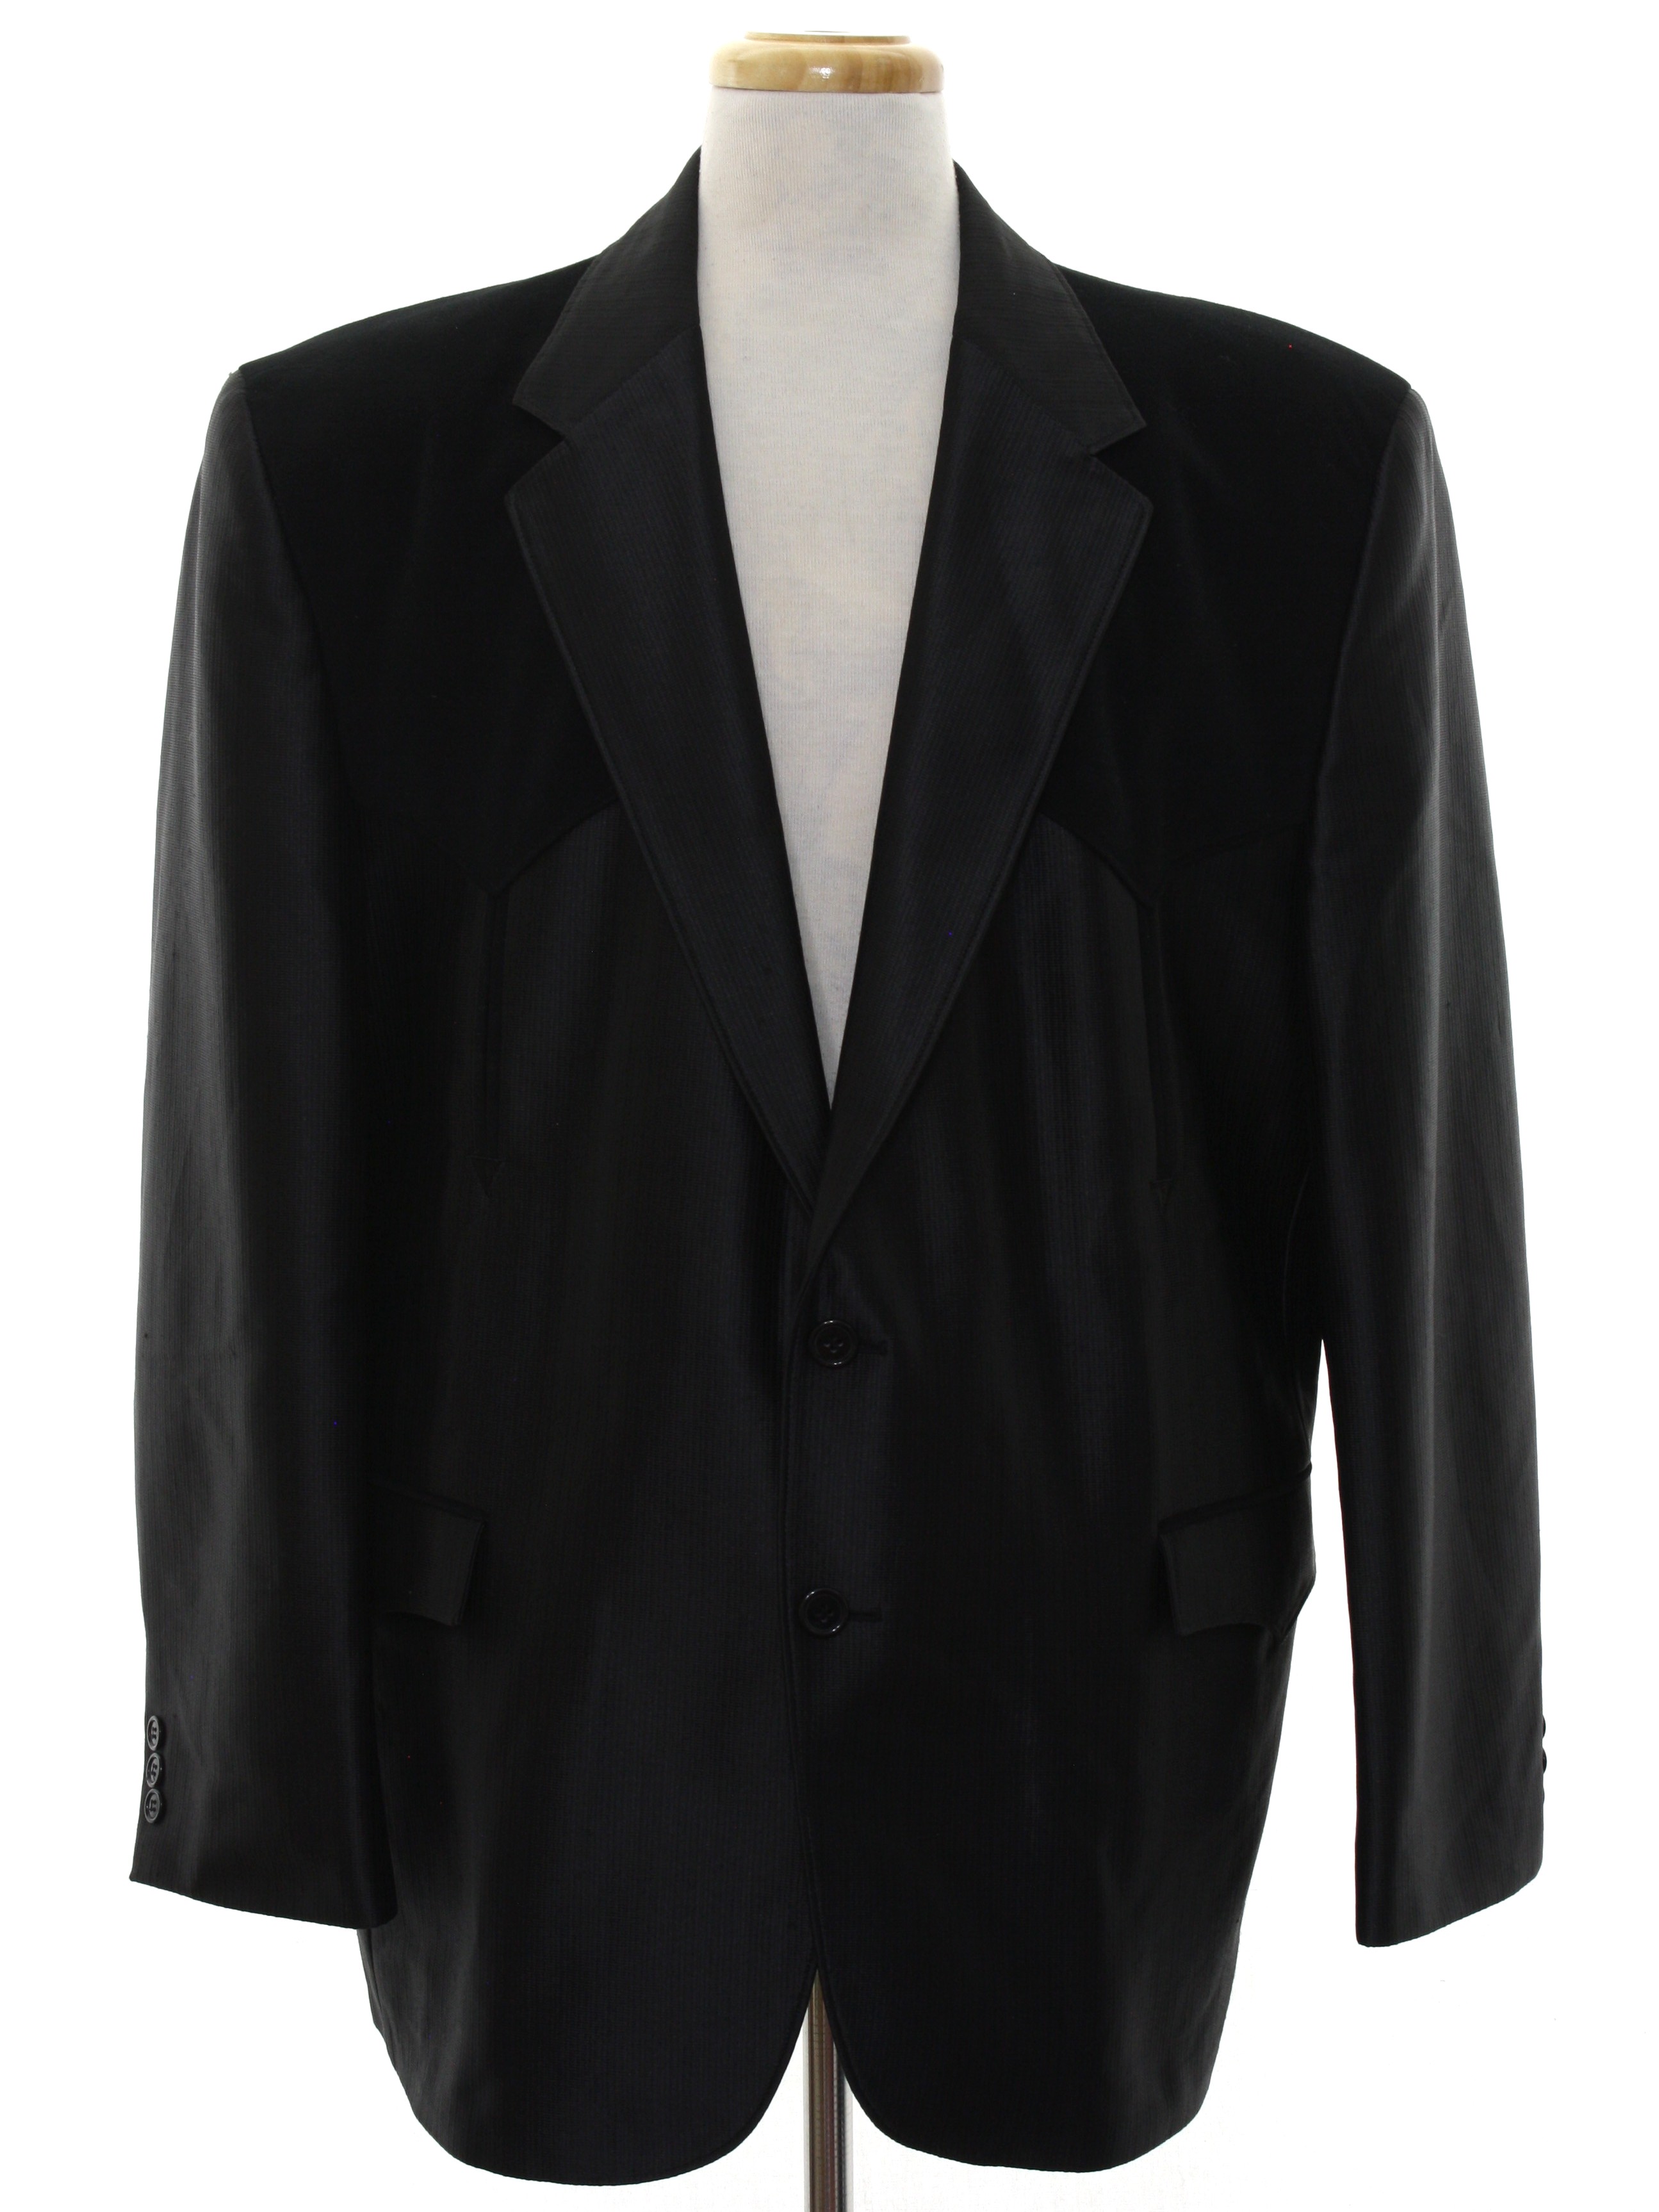 Retro 1980s Jacket: Late 80s or Early 90s -Circle S- Mens shiny black ...